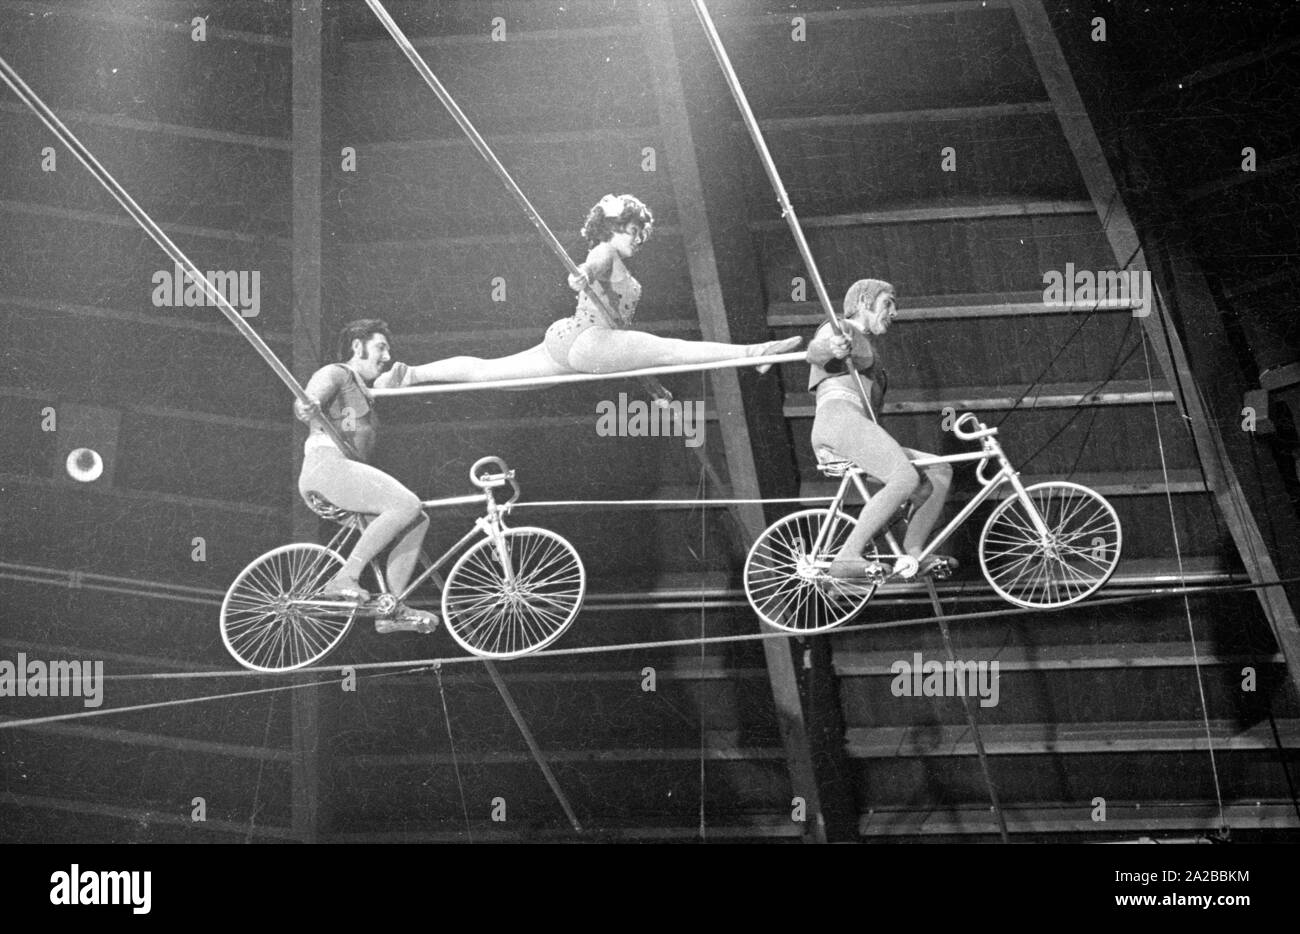 Spectacular stunts Black and White Stock Photos & Images - Alamy